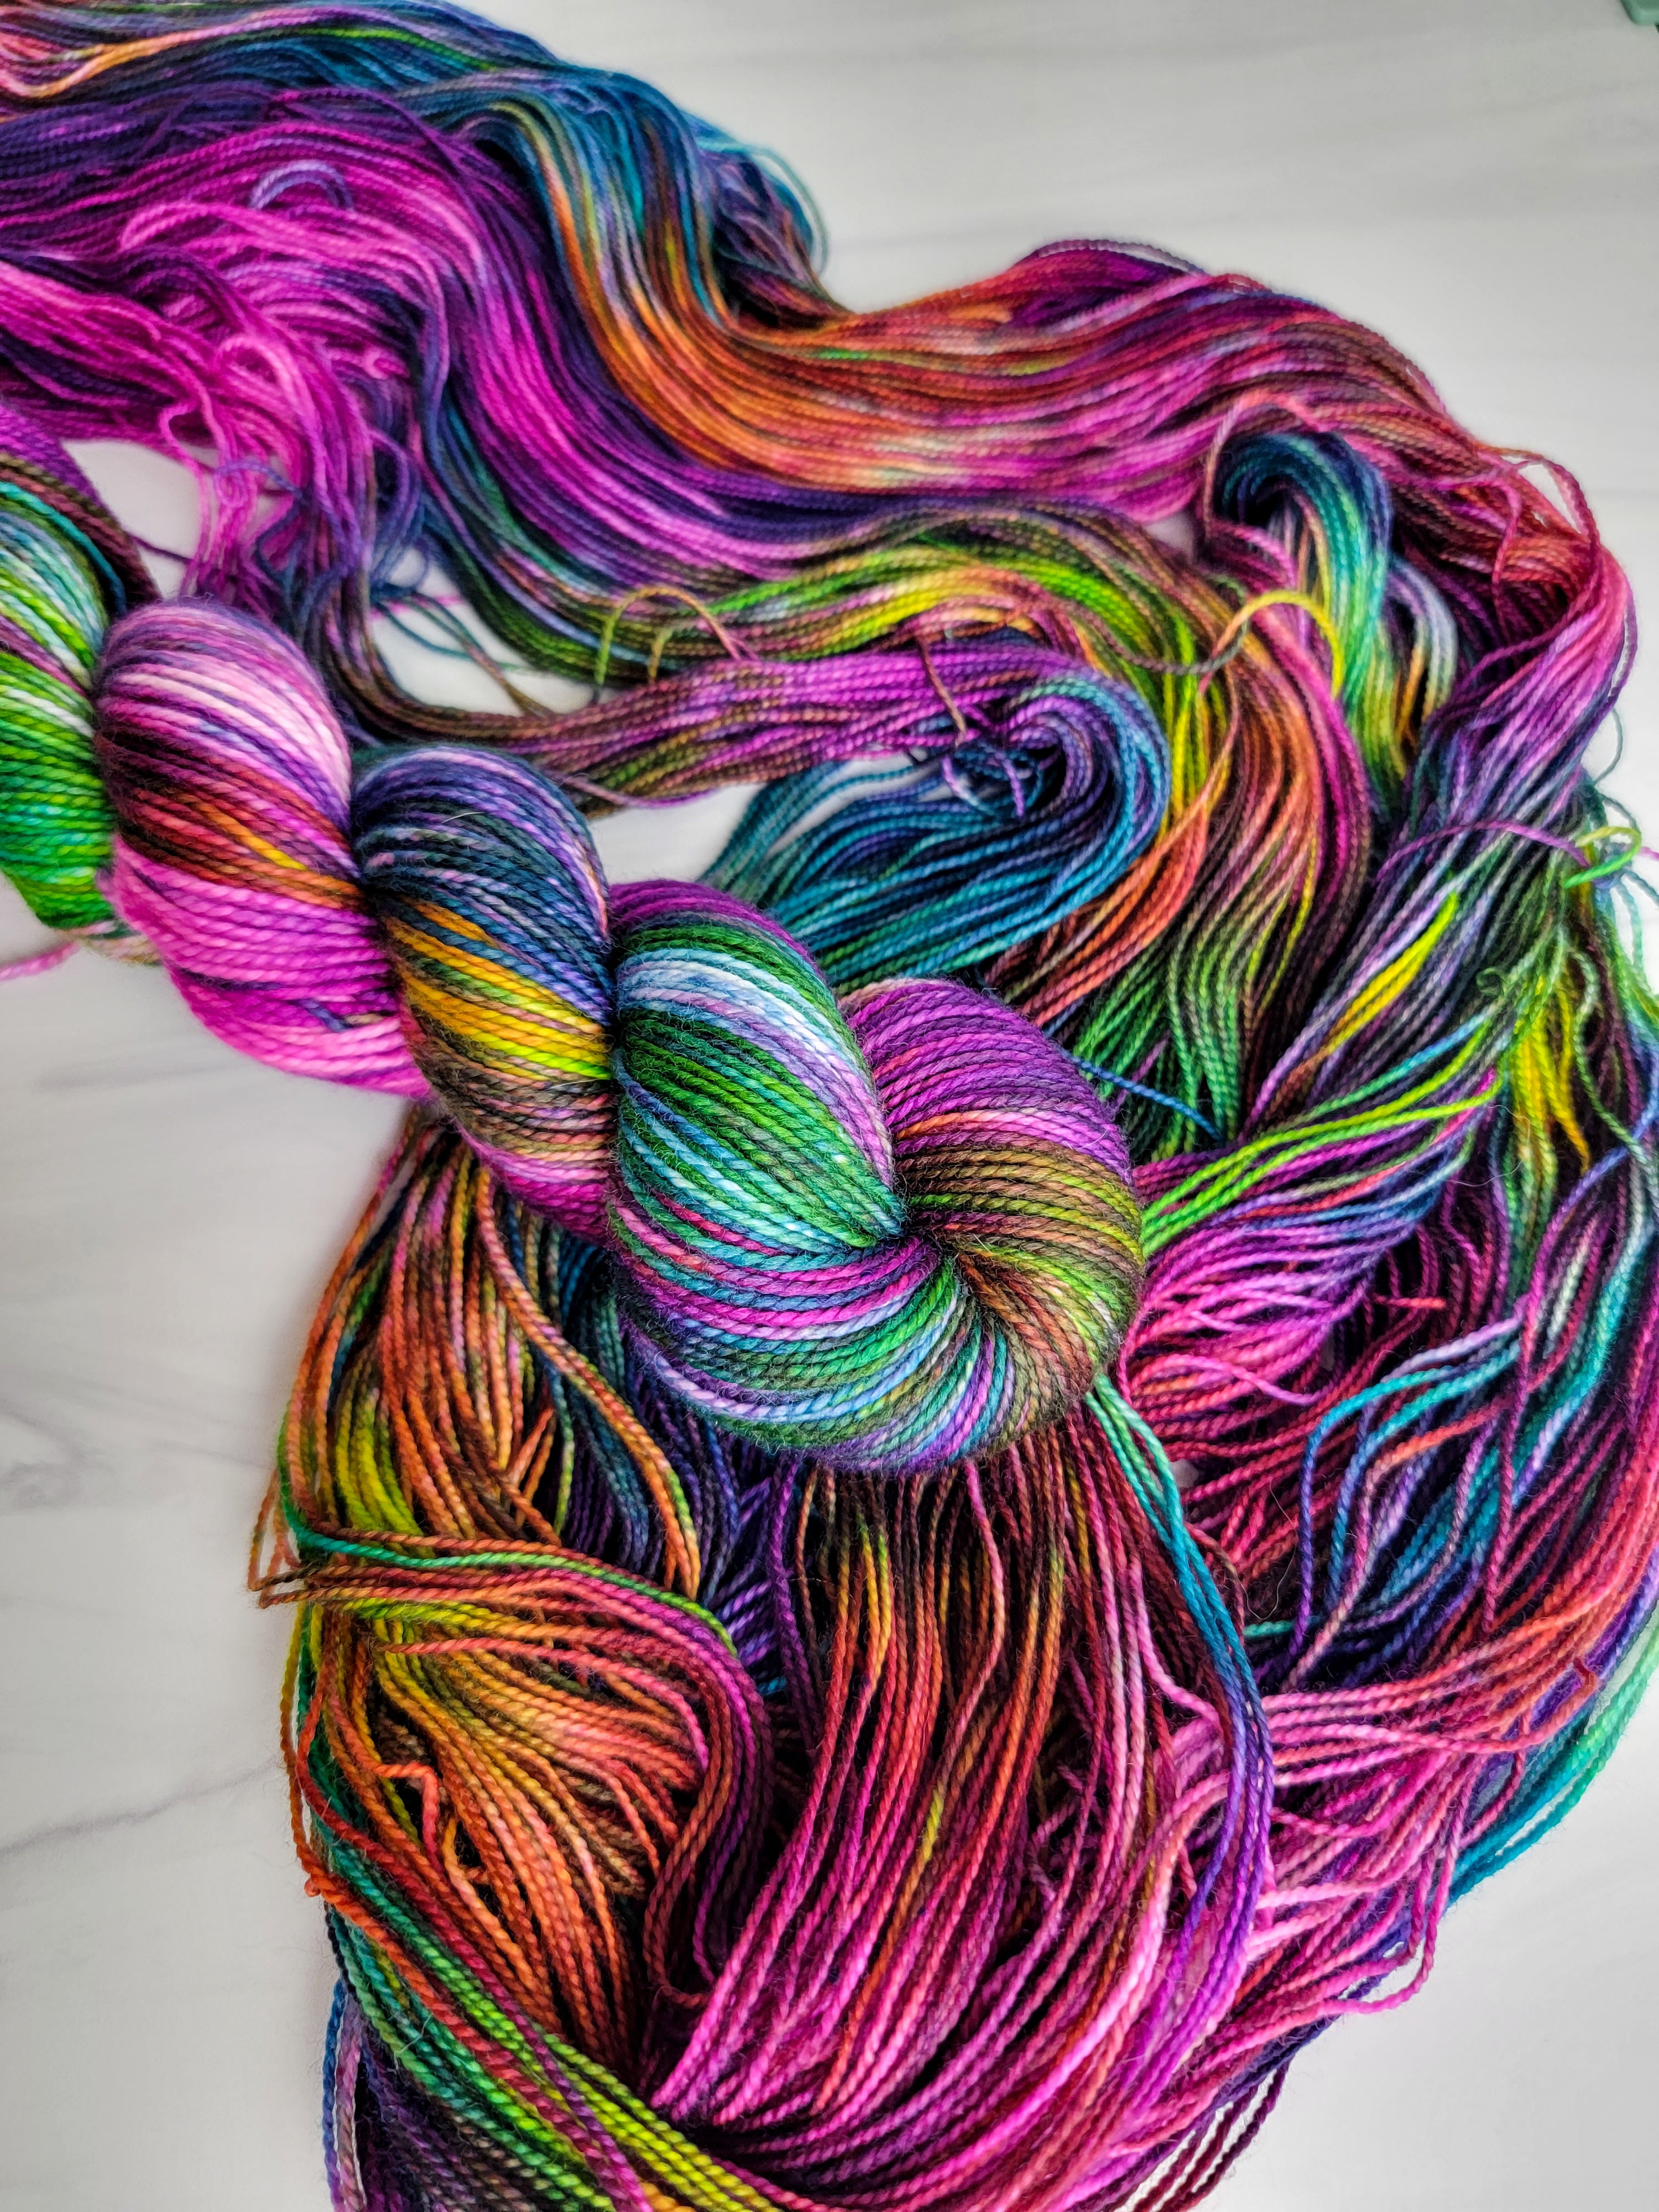 Yarnart Nordic - Multicolor Knitting Yarn Variegated - 663